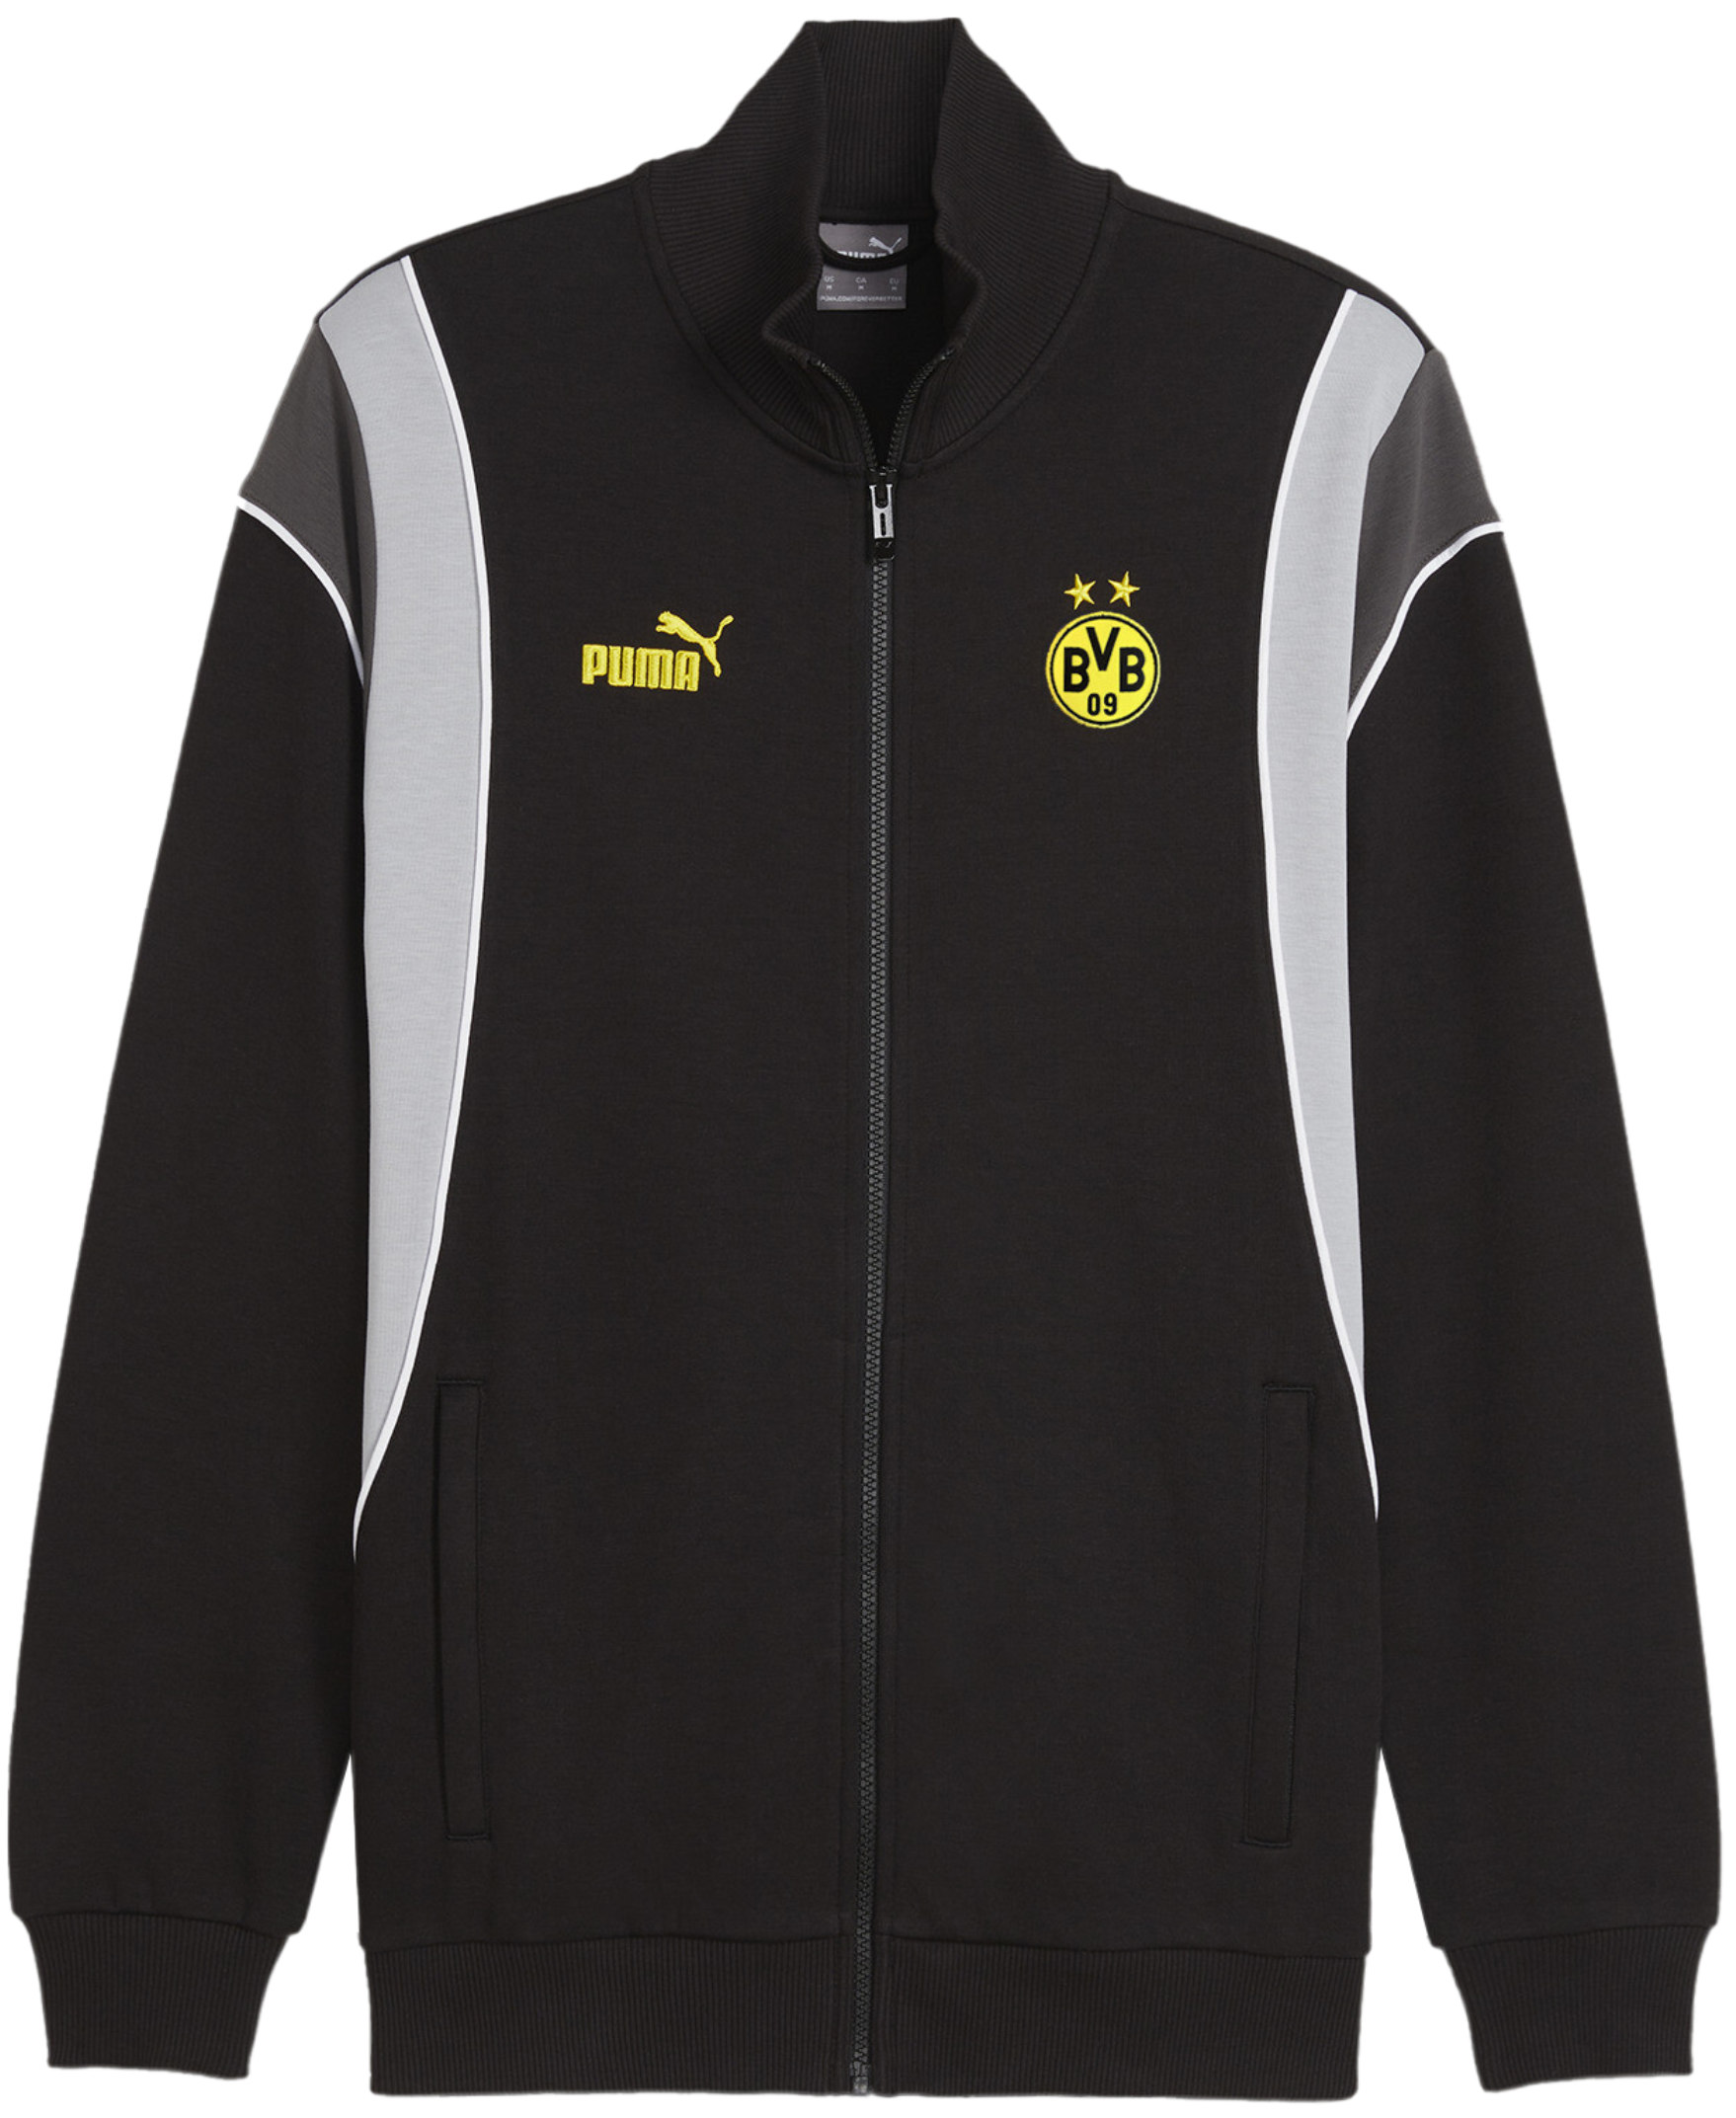 Casaco Puma BVB Dortmund Ftbl Archive Trainings jacket